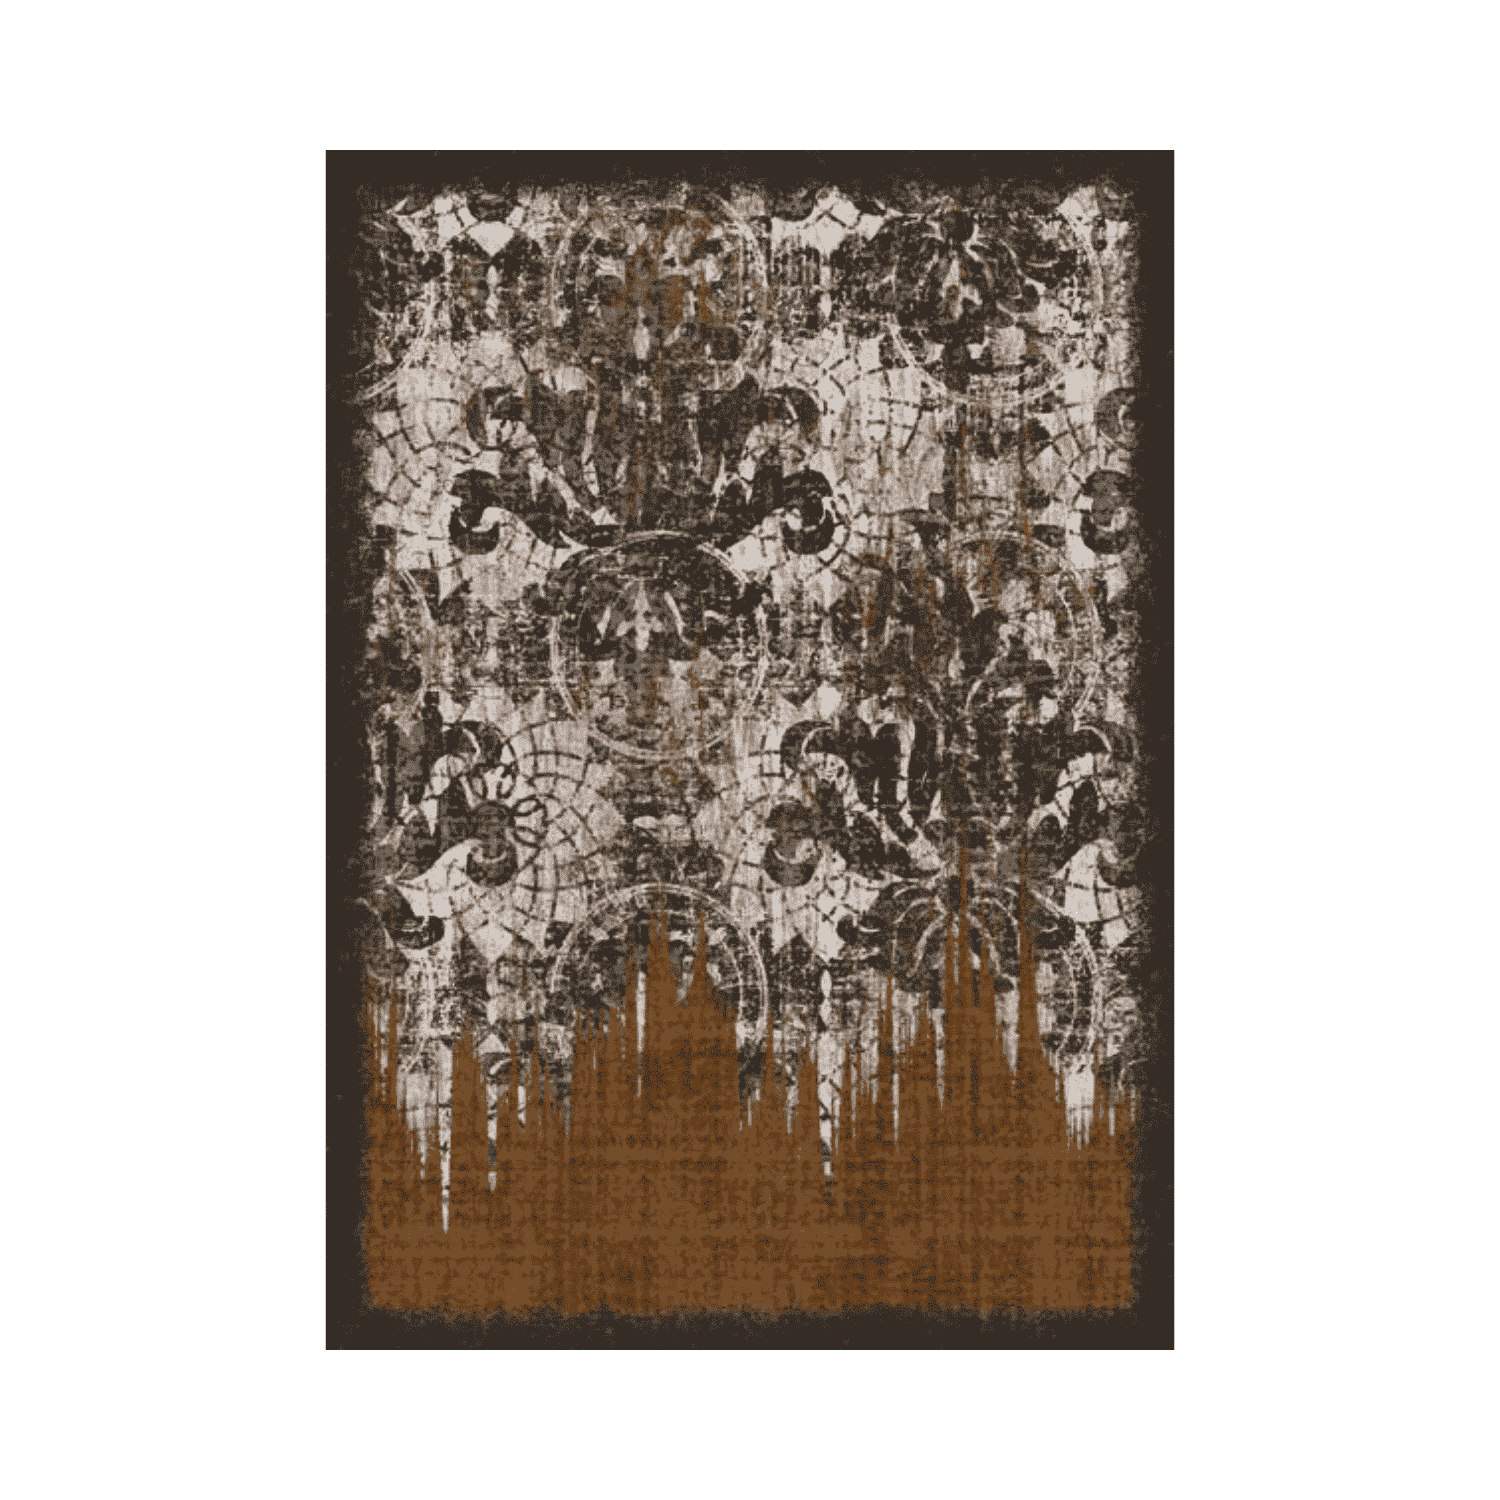 pompei-tappeto-arredo-emozioni-artista-domus-pompeiana-vintage-classico-moderno-geometrico-marrone-grigio-bianco-front